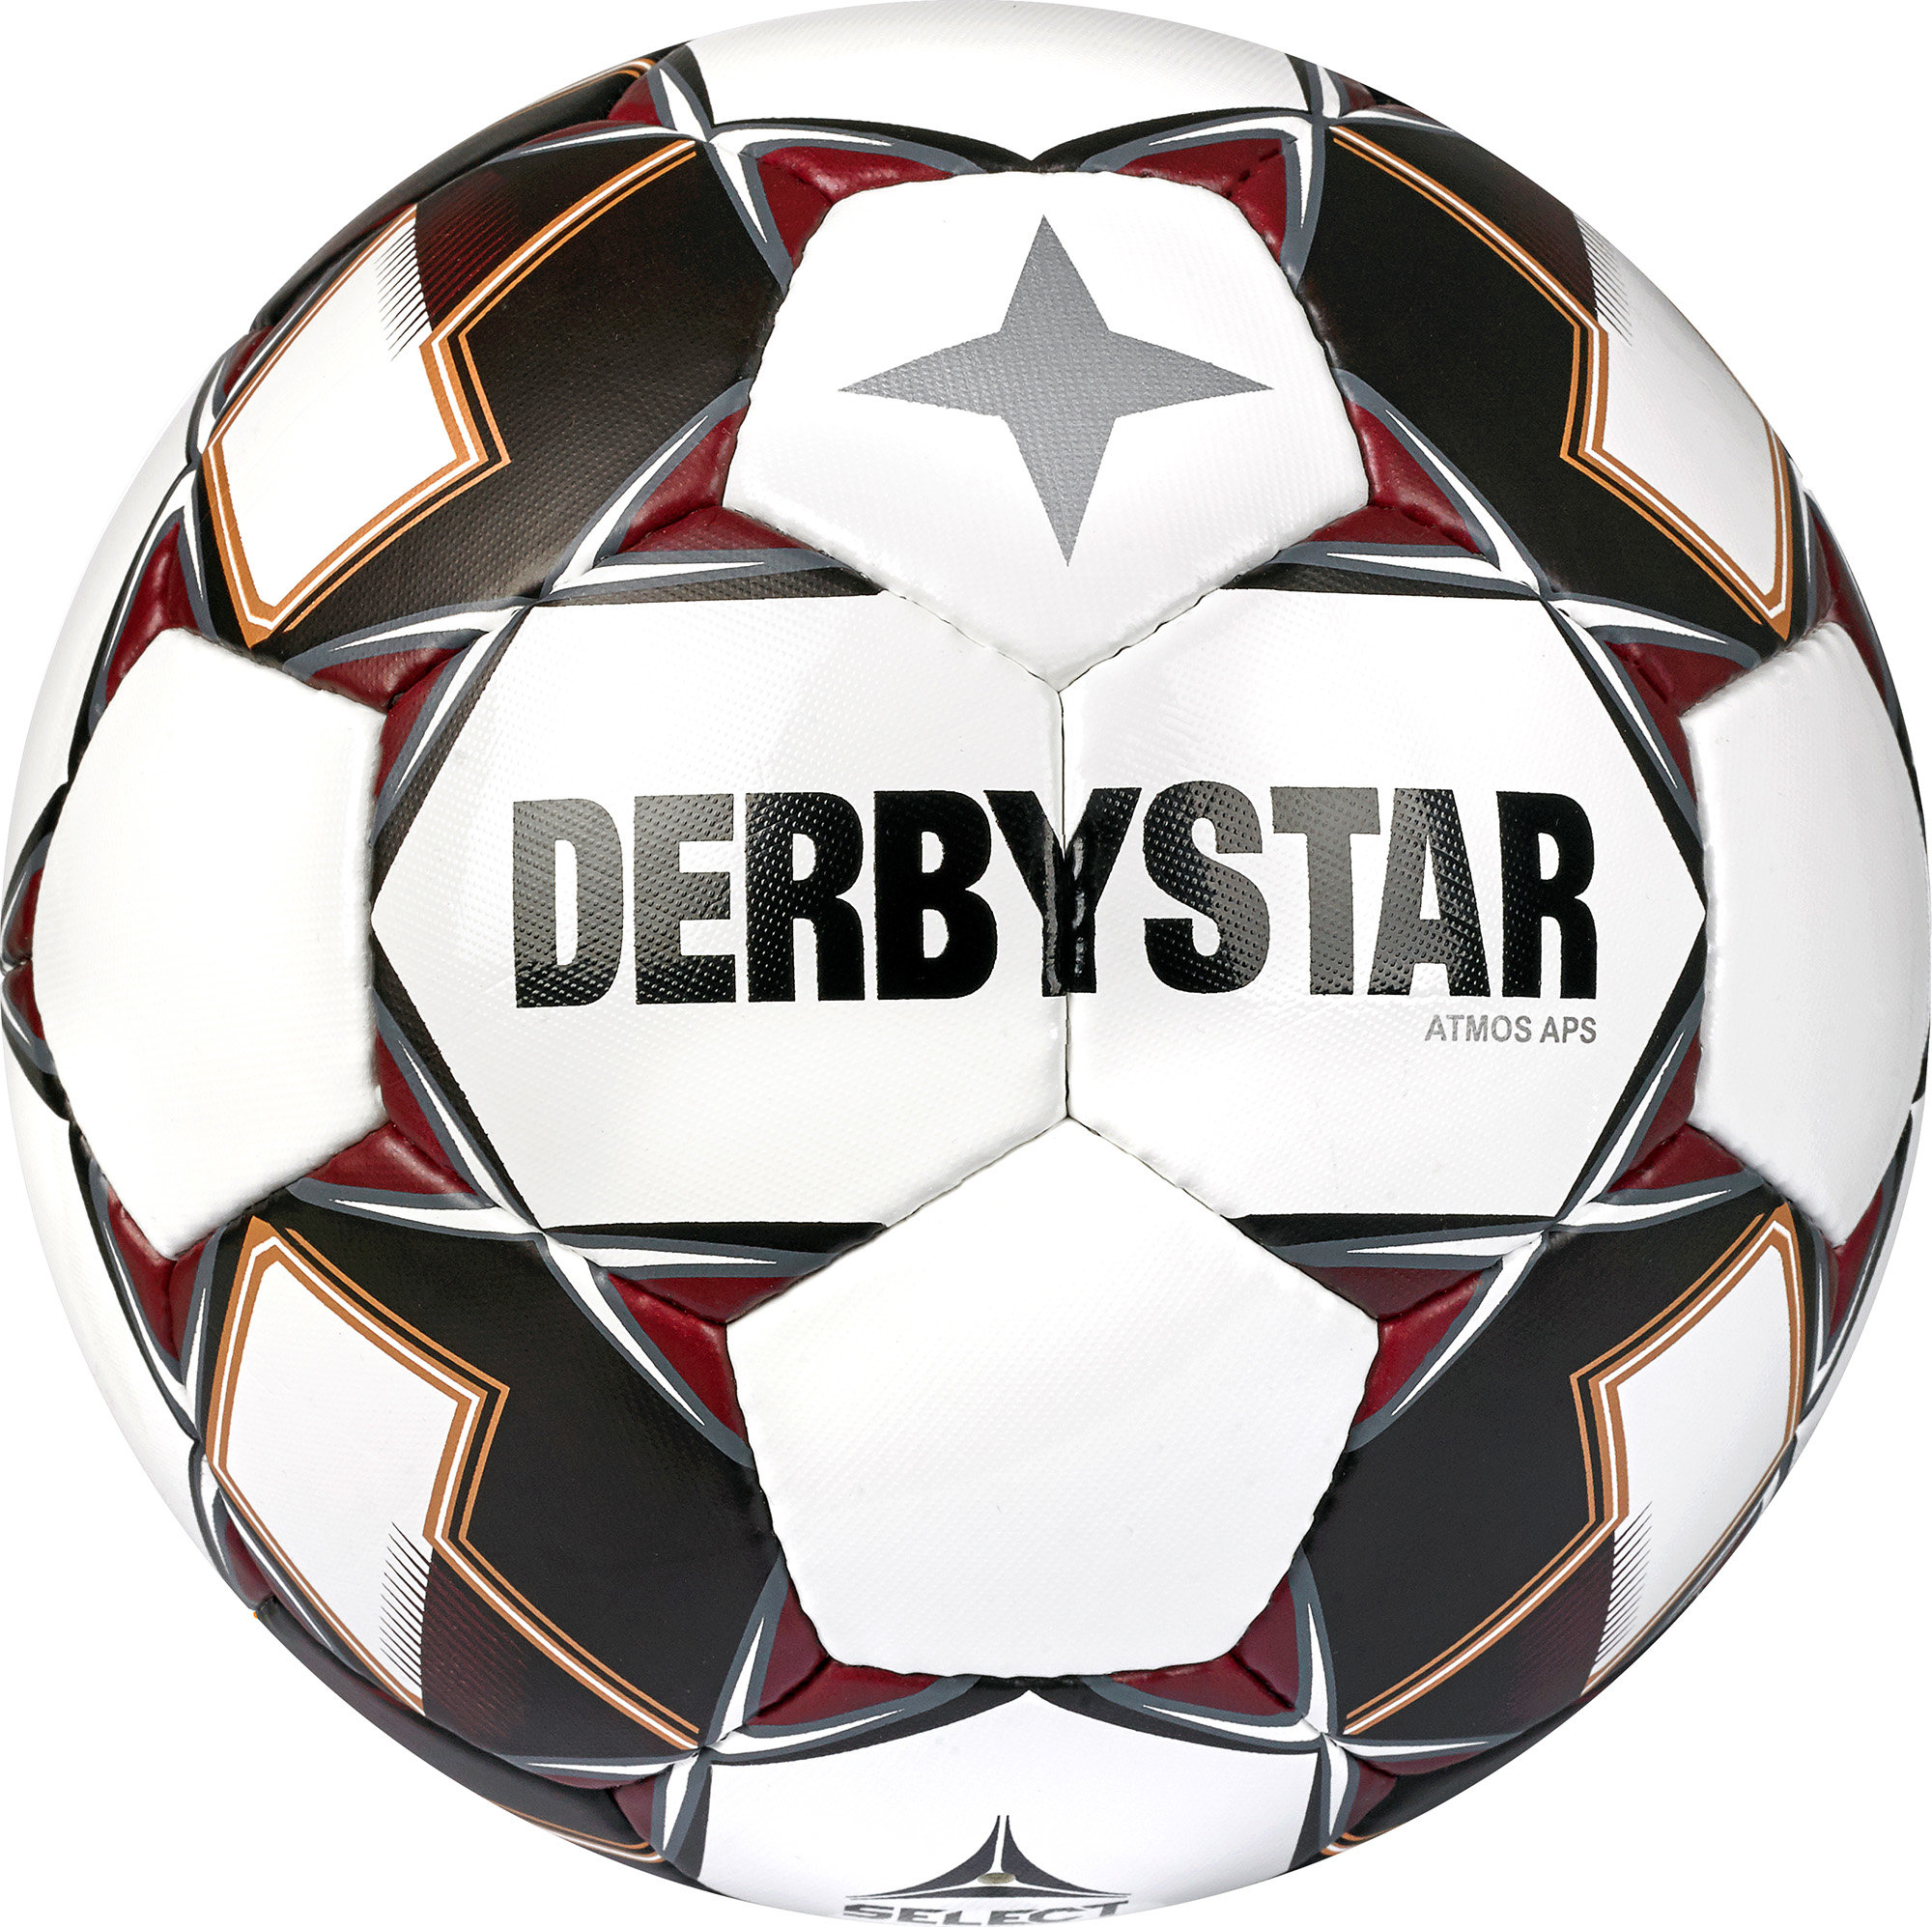 Derbystar Soft Pro Futsal gelb grün schwarz Futsalball Größe 4 Hallenfußball NEU 